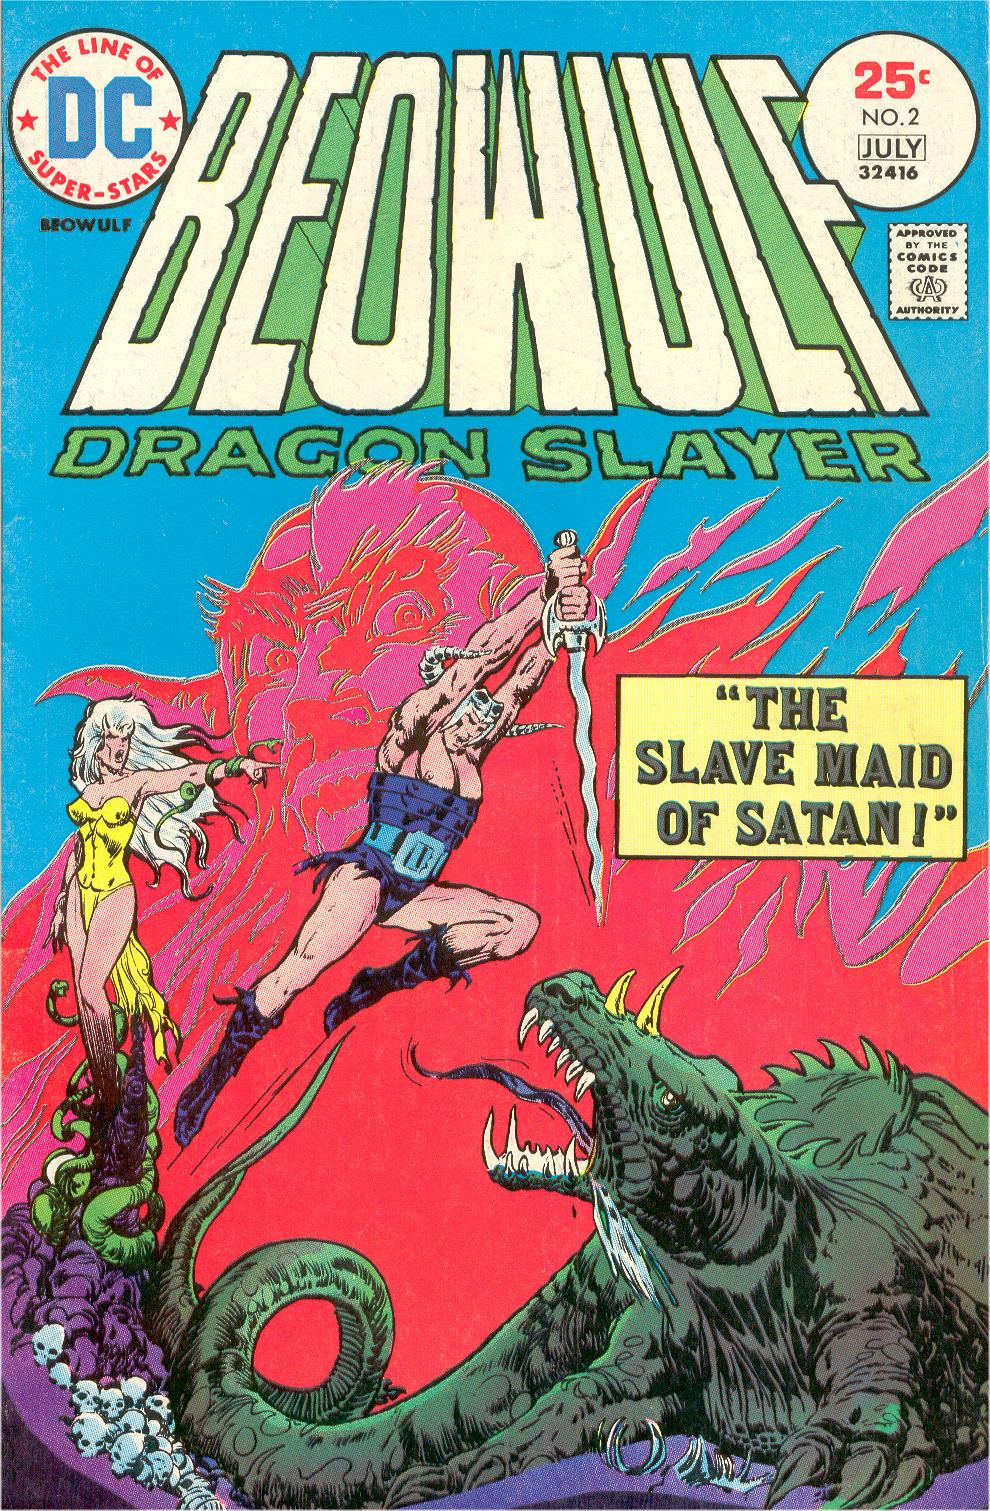 BEOWULF, DRAGON SLAYER #2 -- 'The Slave Maid Of Satan!'